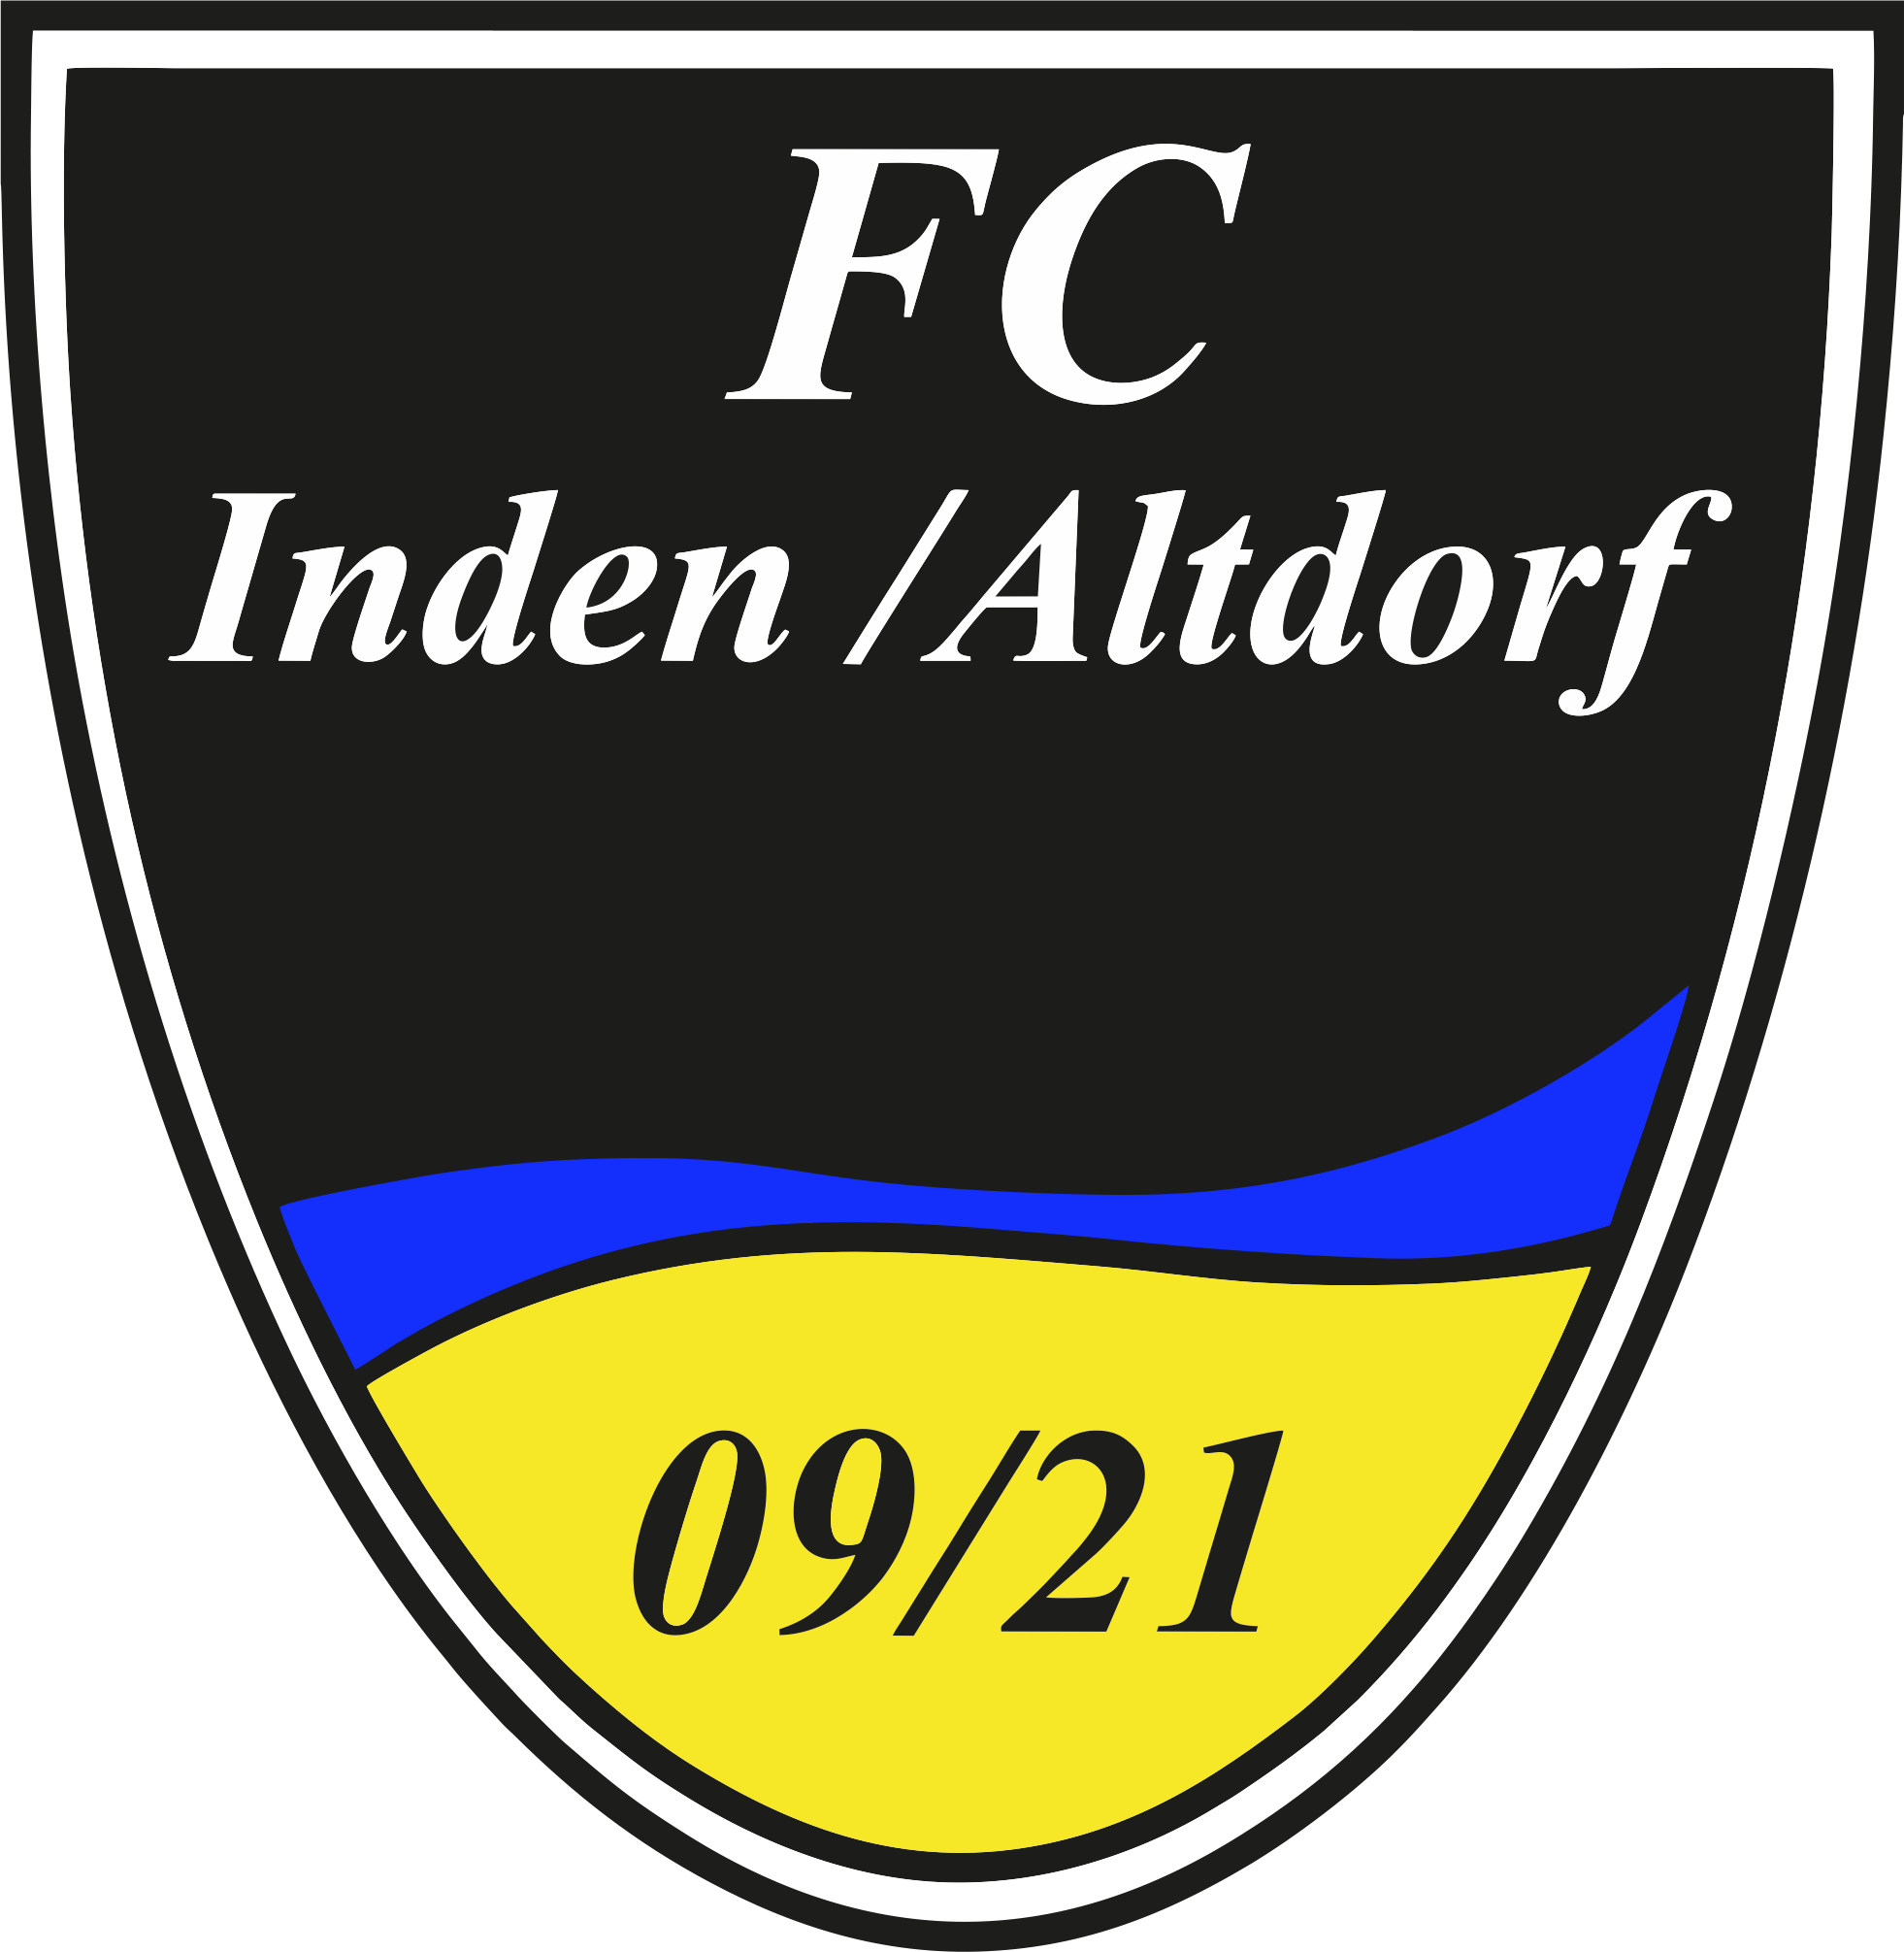 FC Inden/Altdorf 09/21 Logo